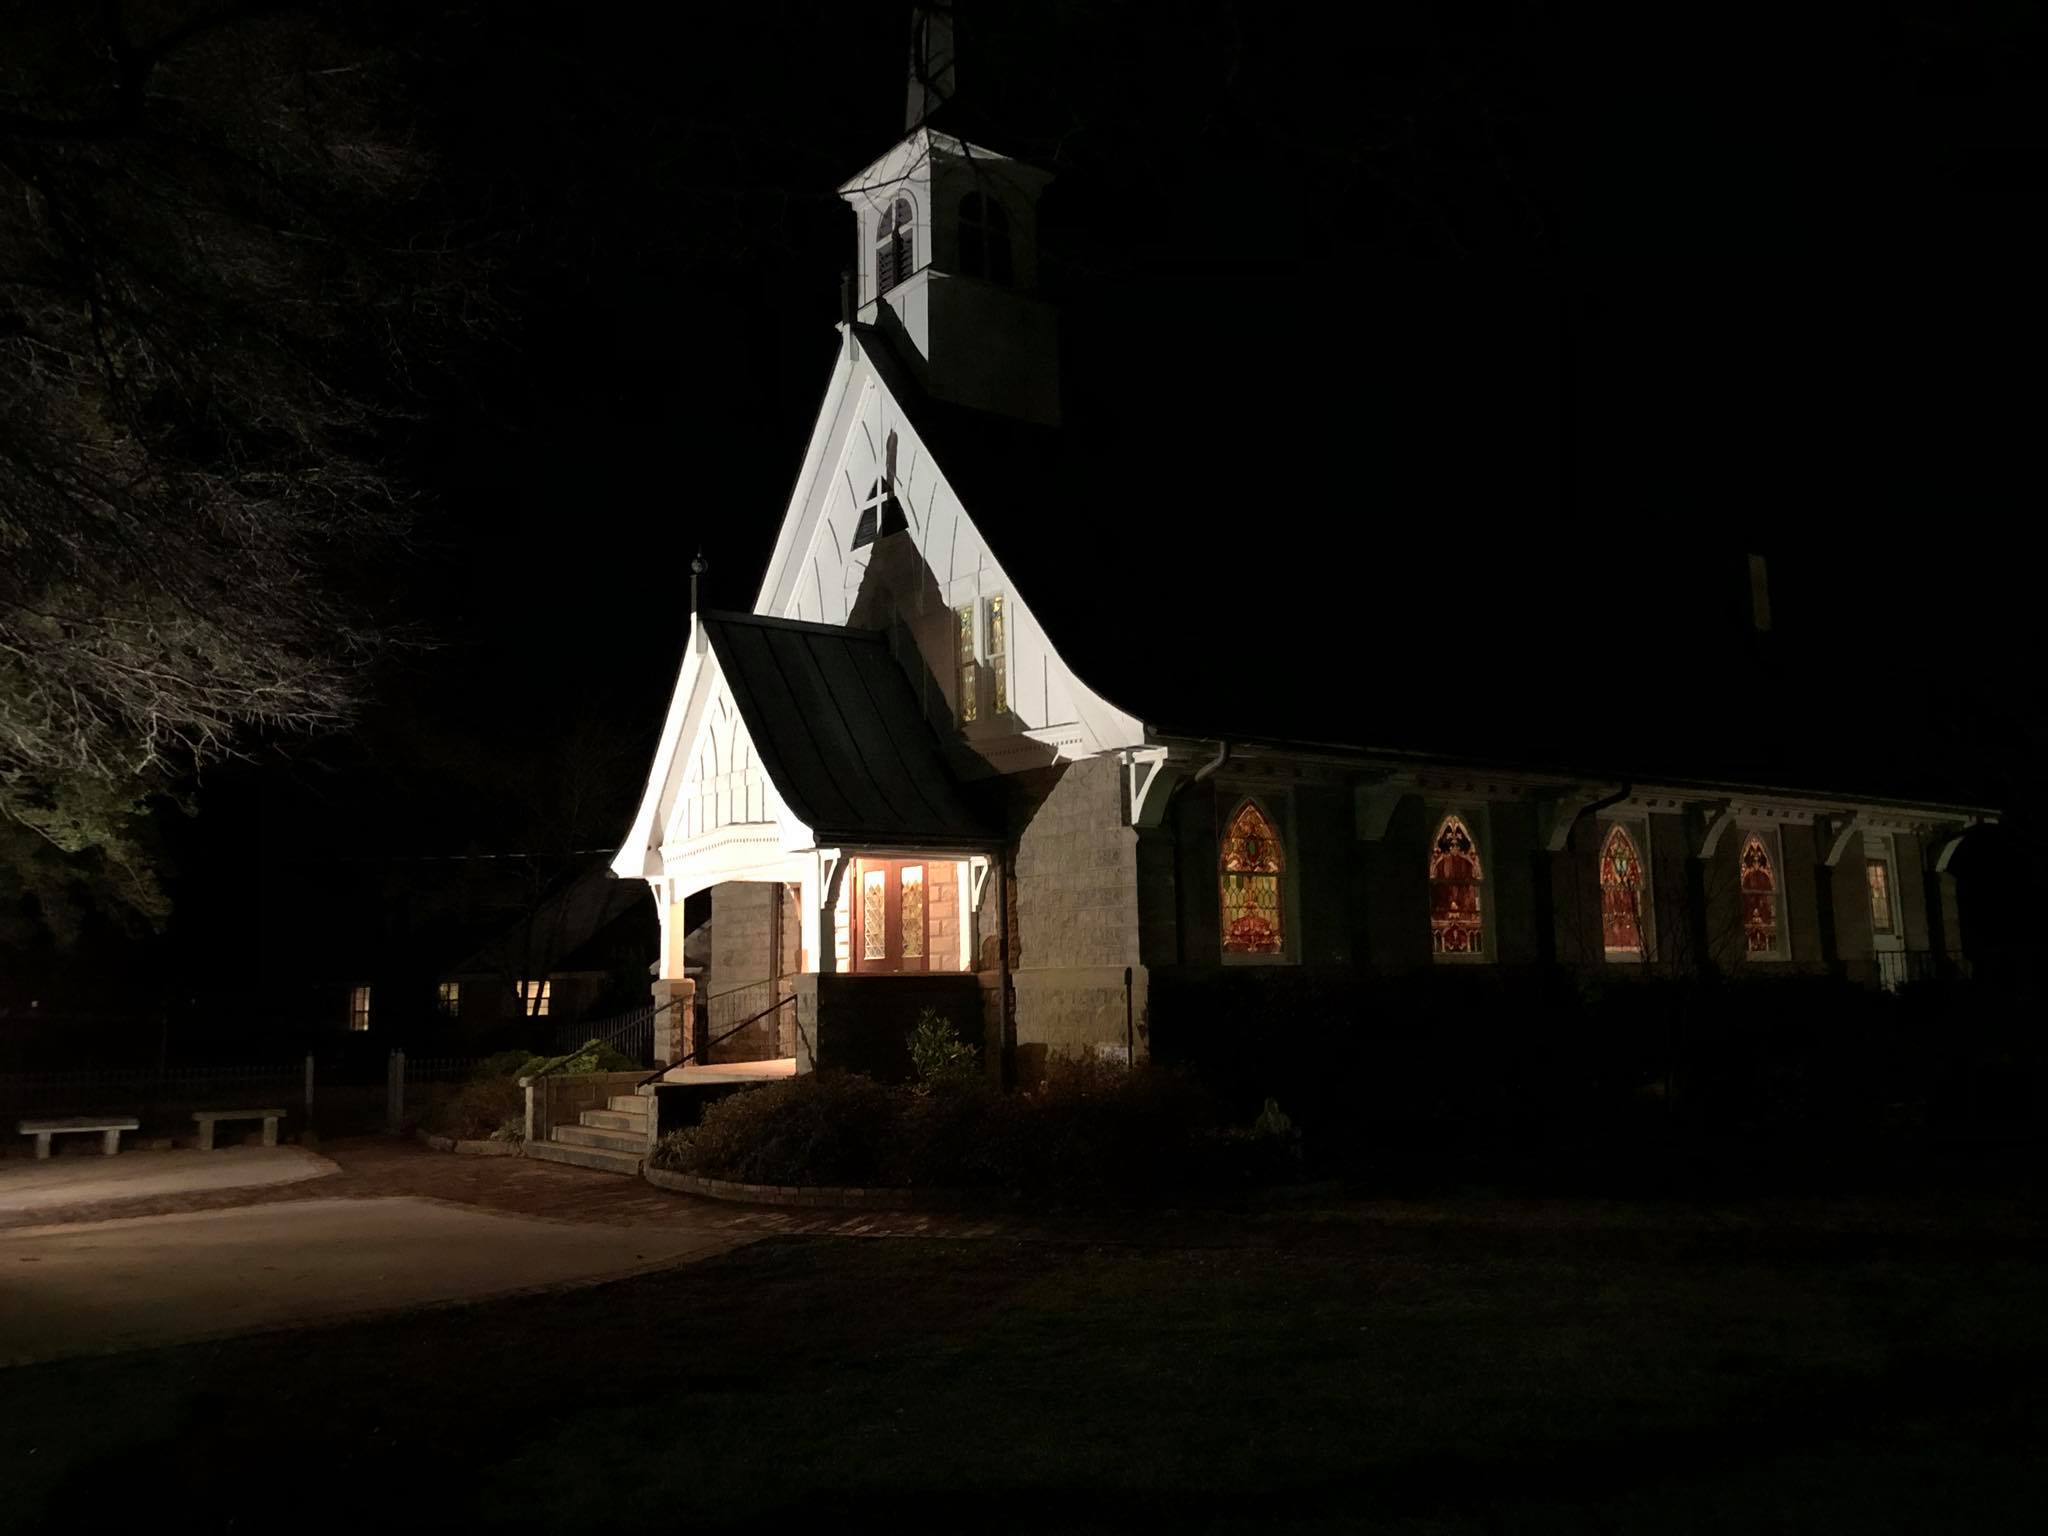 Nighttime at All Souls Church in Scott, Arkansas